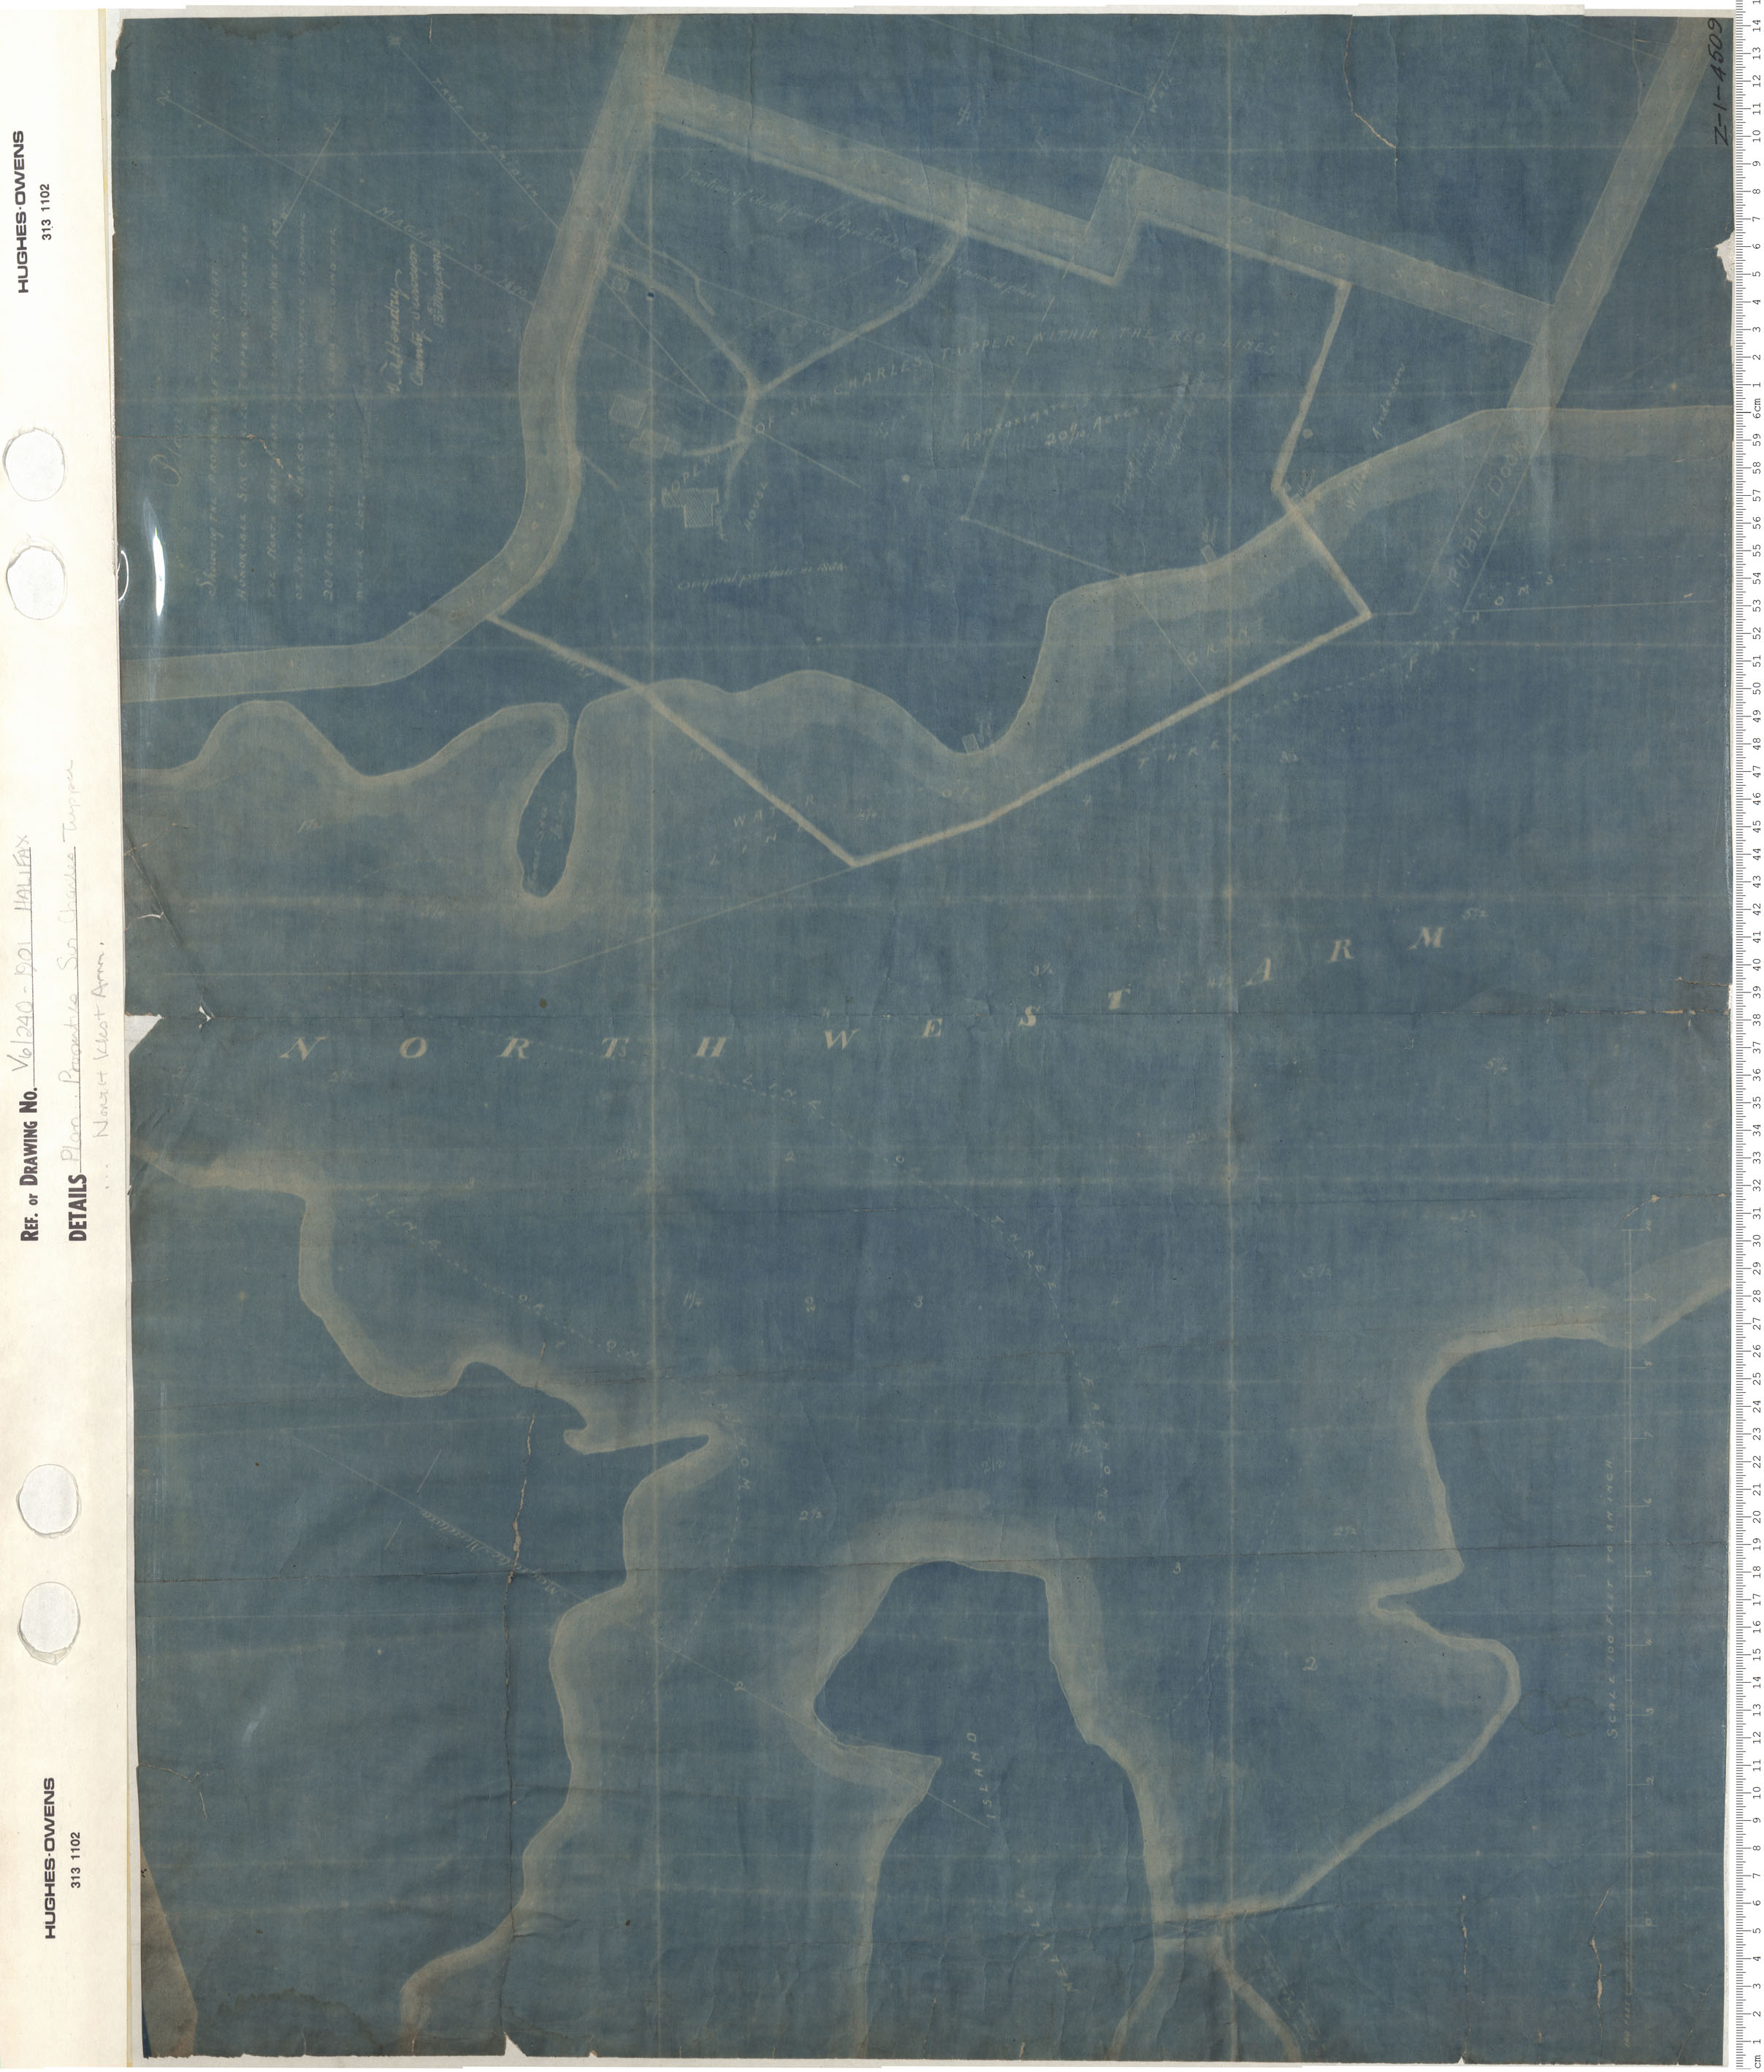 Plan of Properties of Sir Charles Tupper…North West Arm